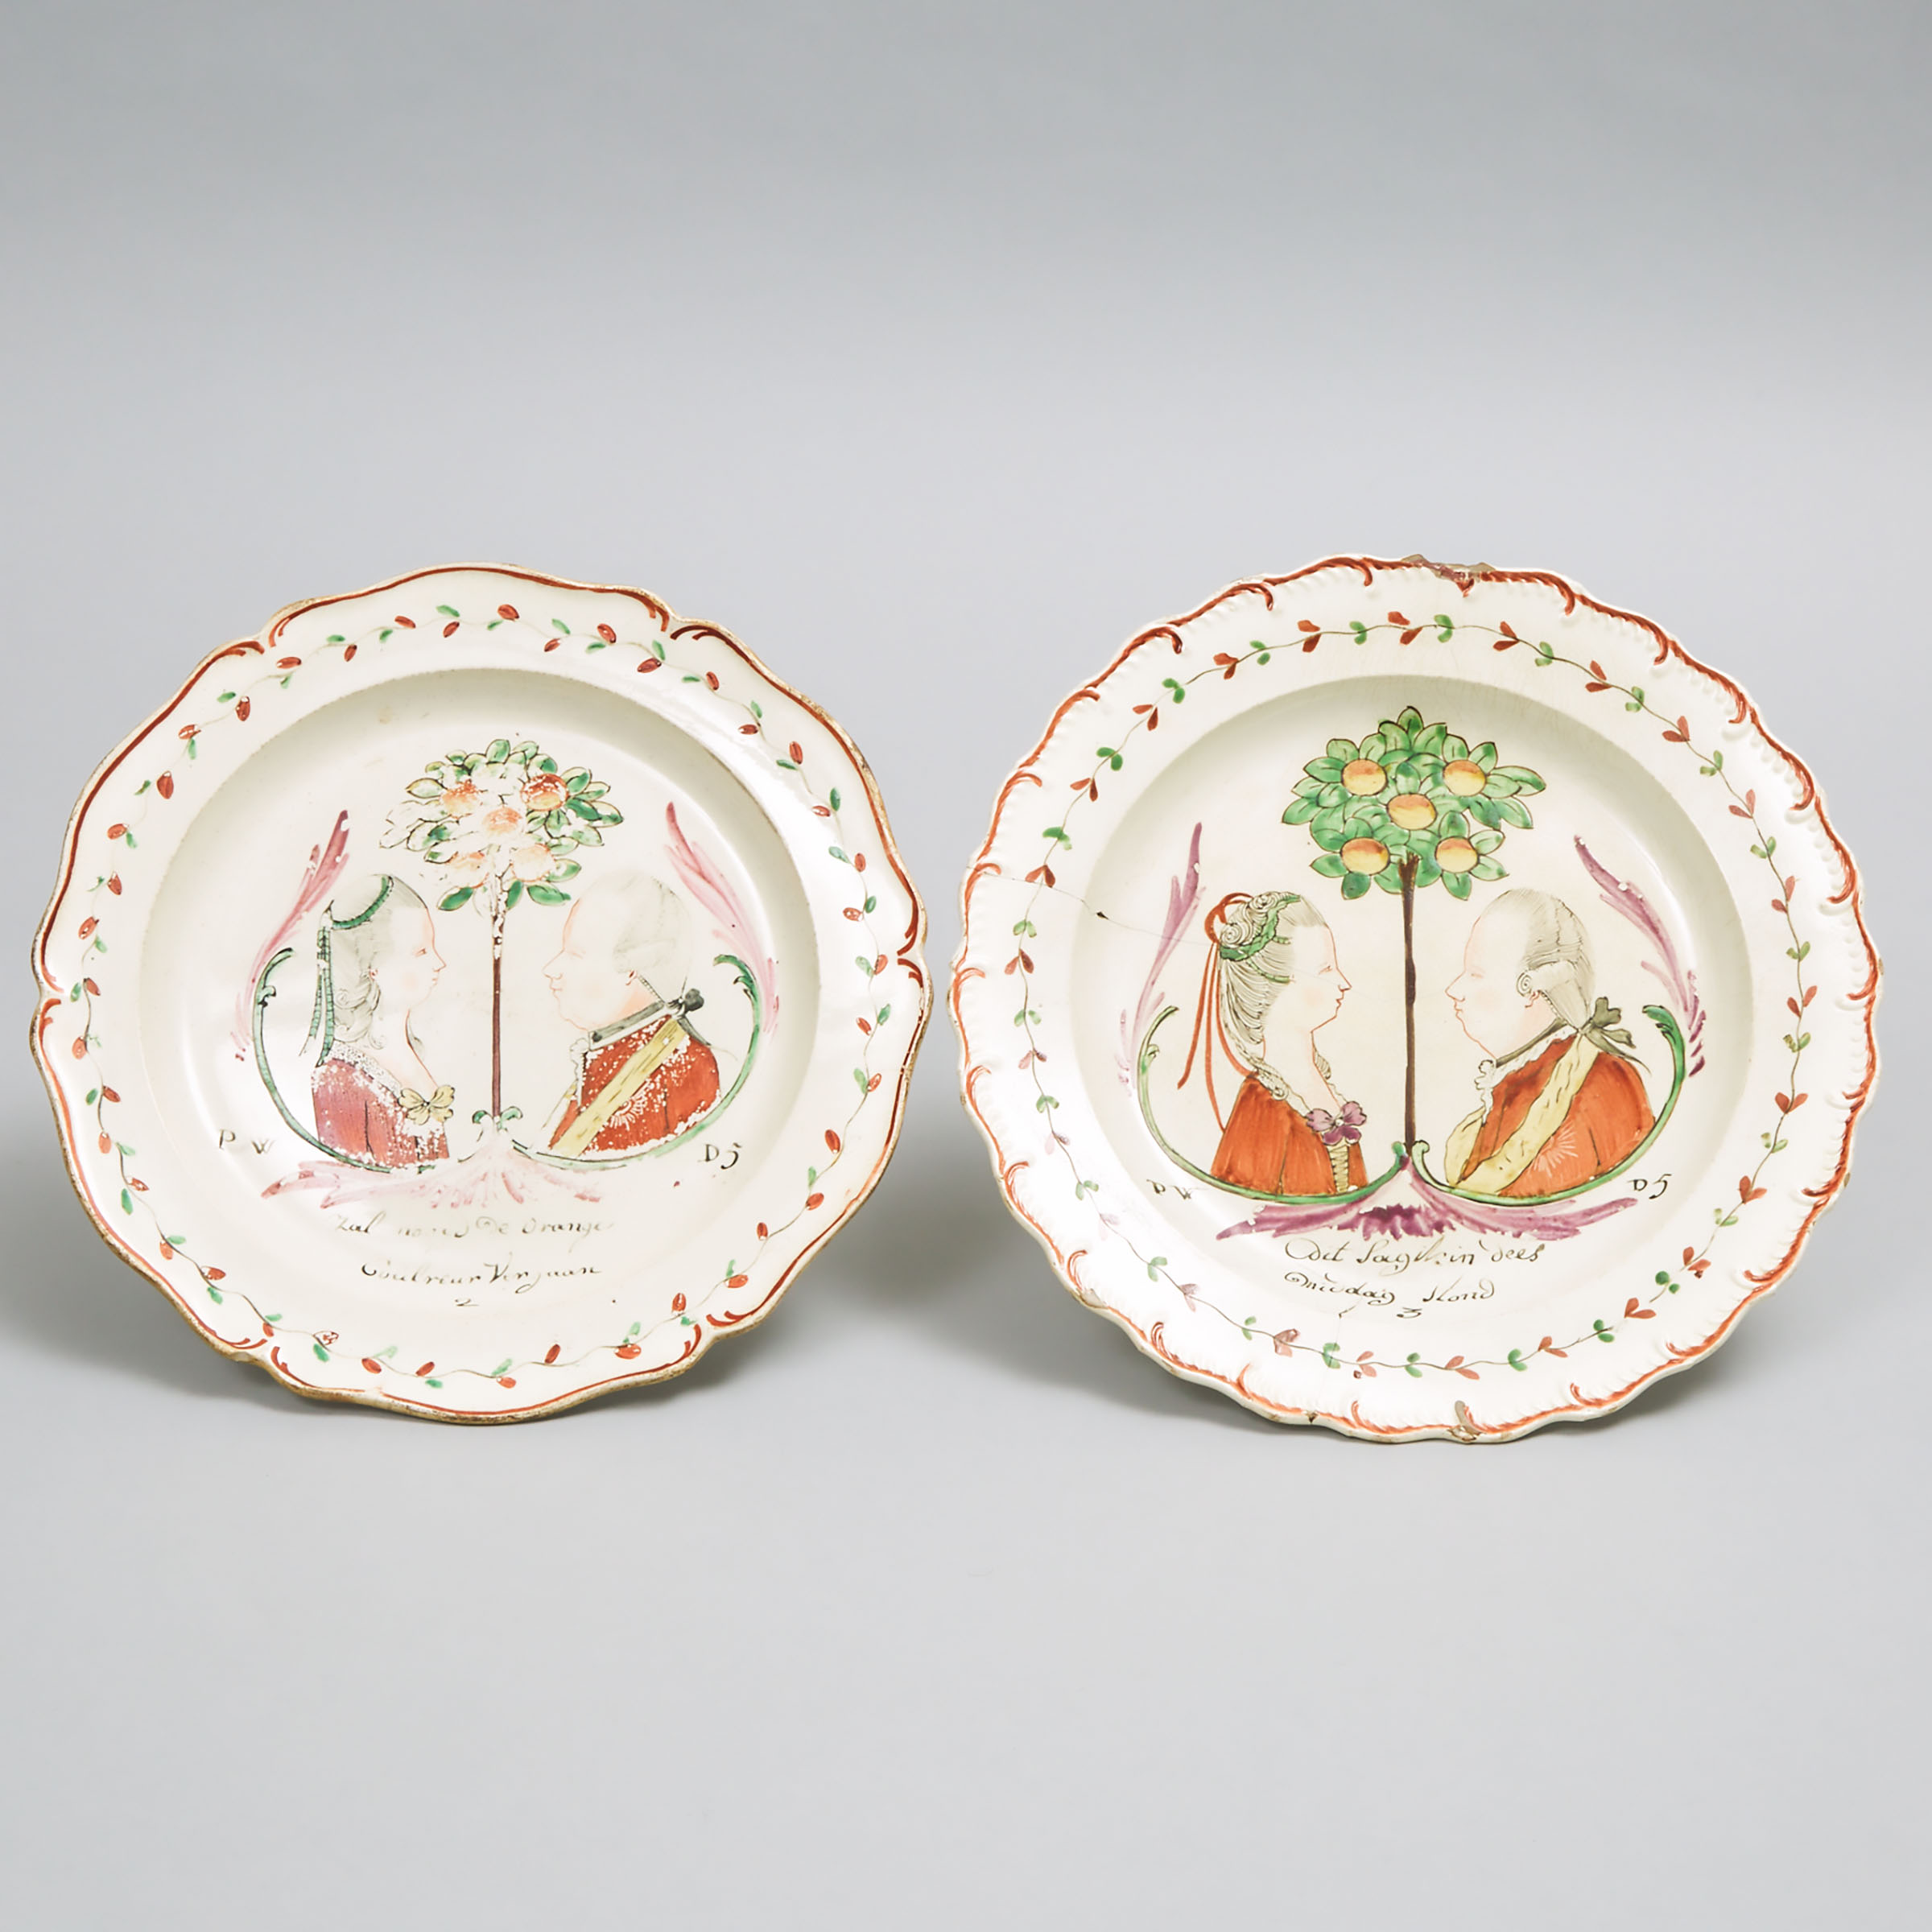 Two Dutch-Decorated English Creamware Orangist Royal Portrait Plates, late 18th century